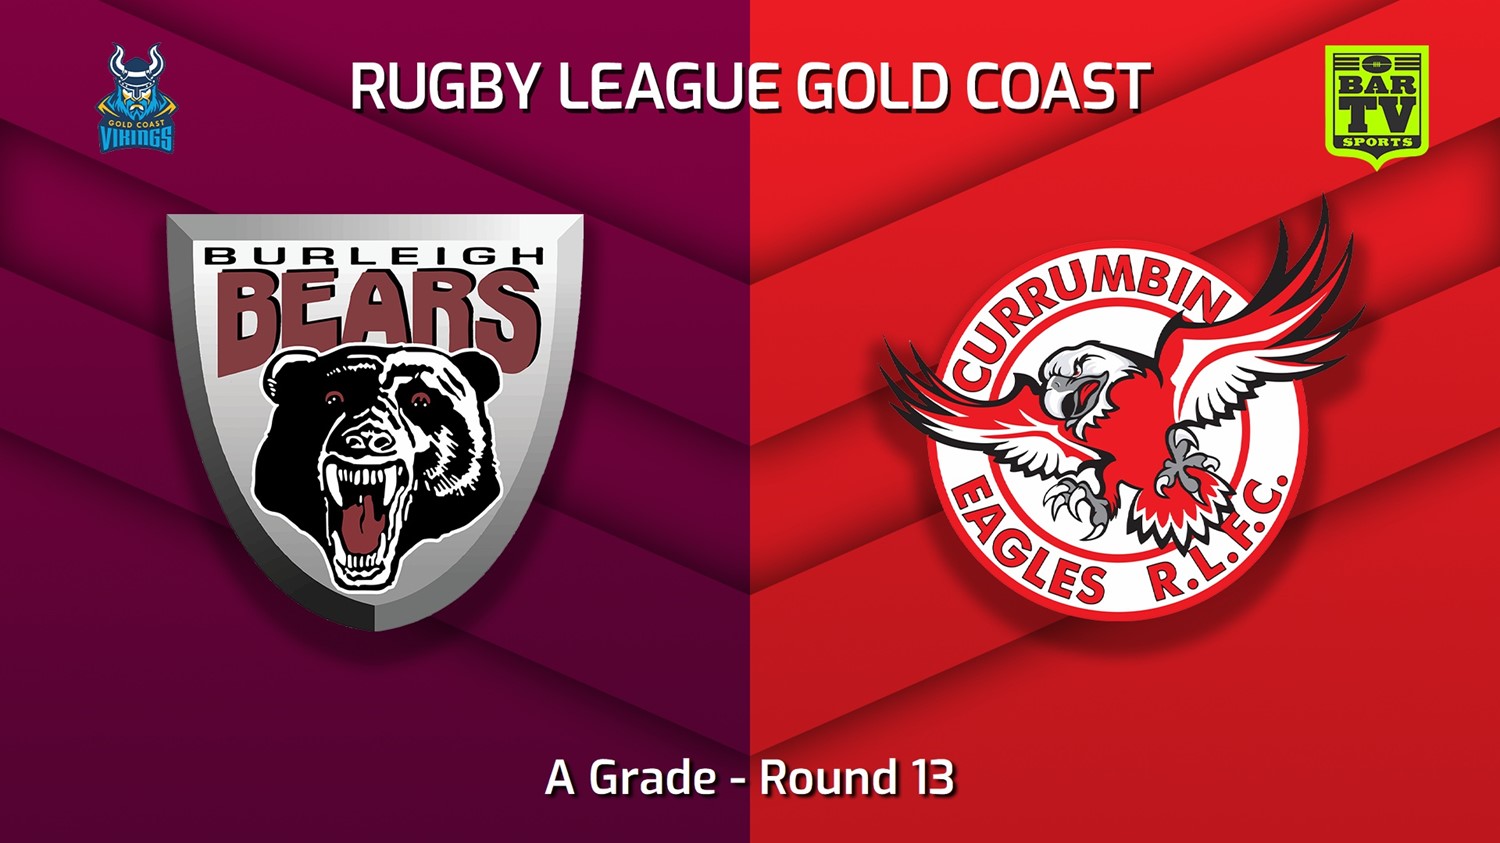 220709-Gold Coast Round 13 - A Grade - Burleigh Bears v Currumbin Eagles Slate Image